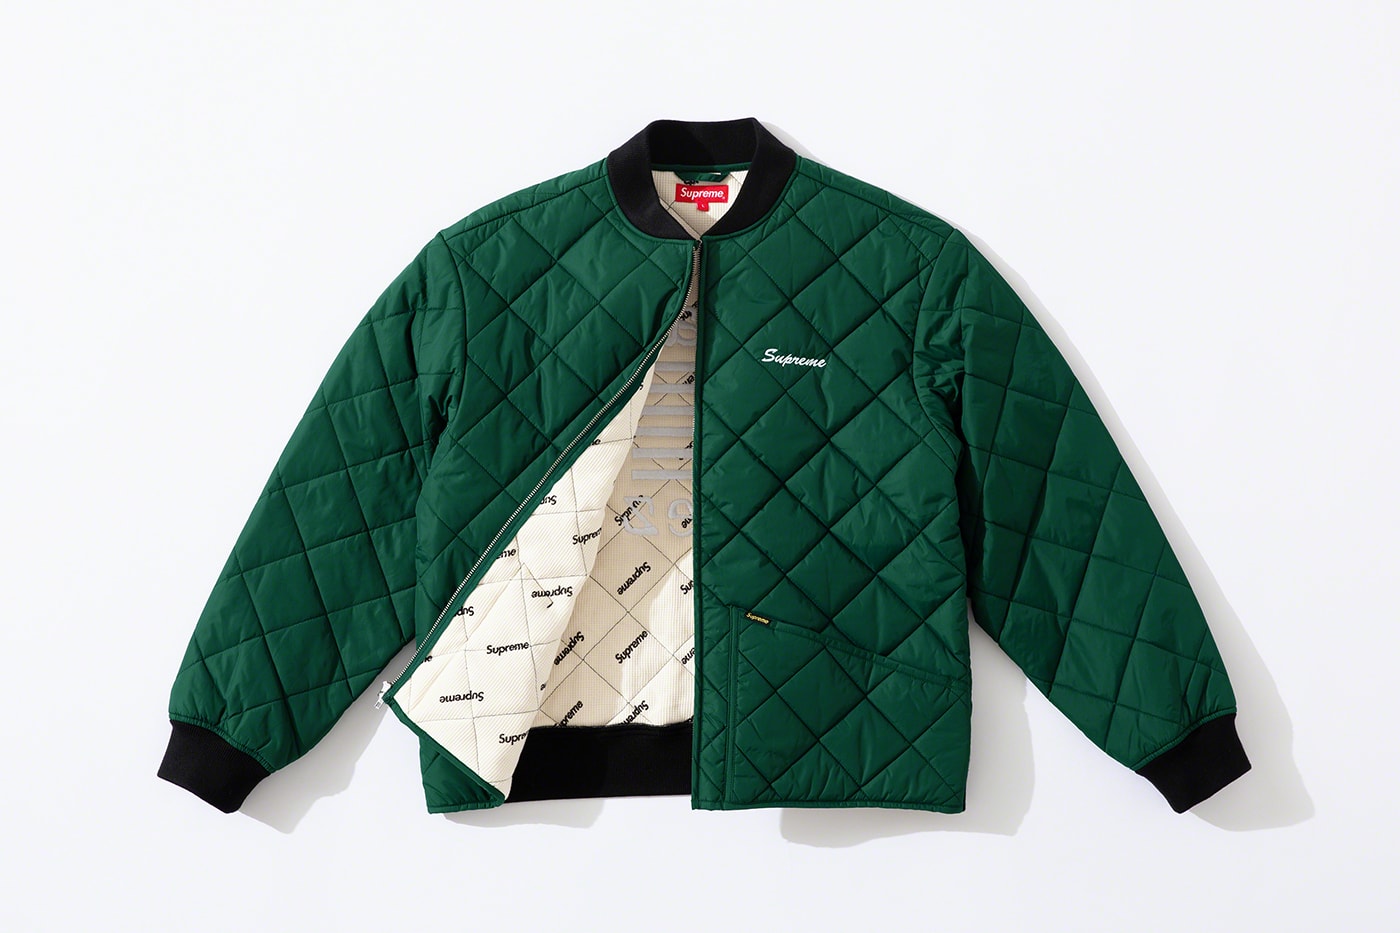 Supreme x dead prez Fall 2019 collaboration hip hop new york supreme jackets hat accessories lookbooks 